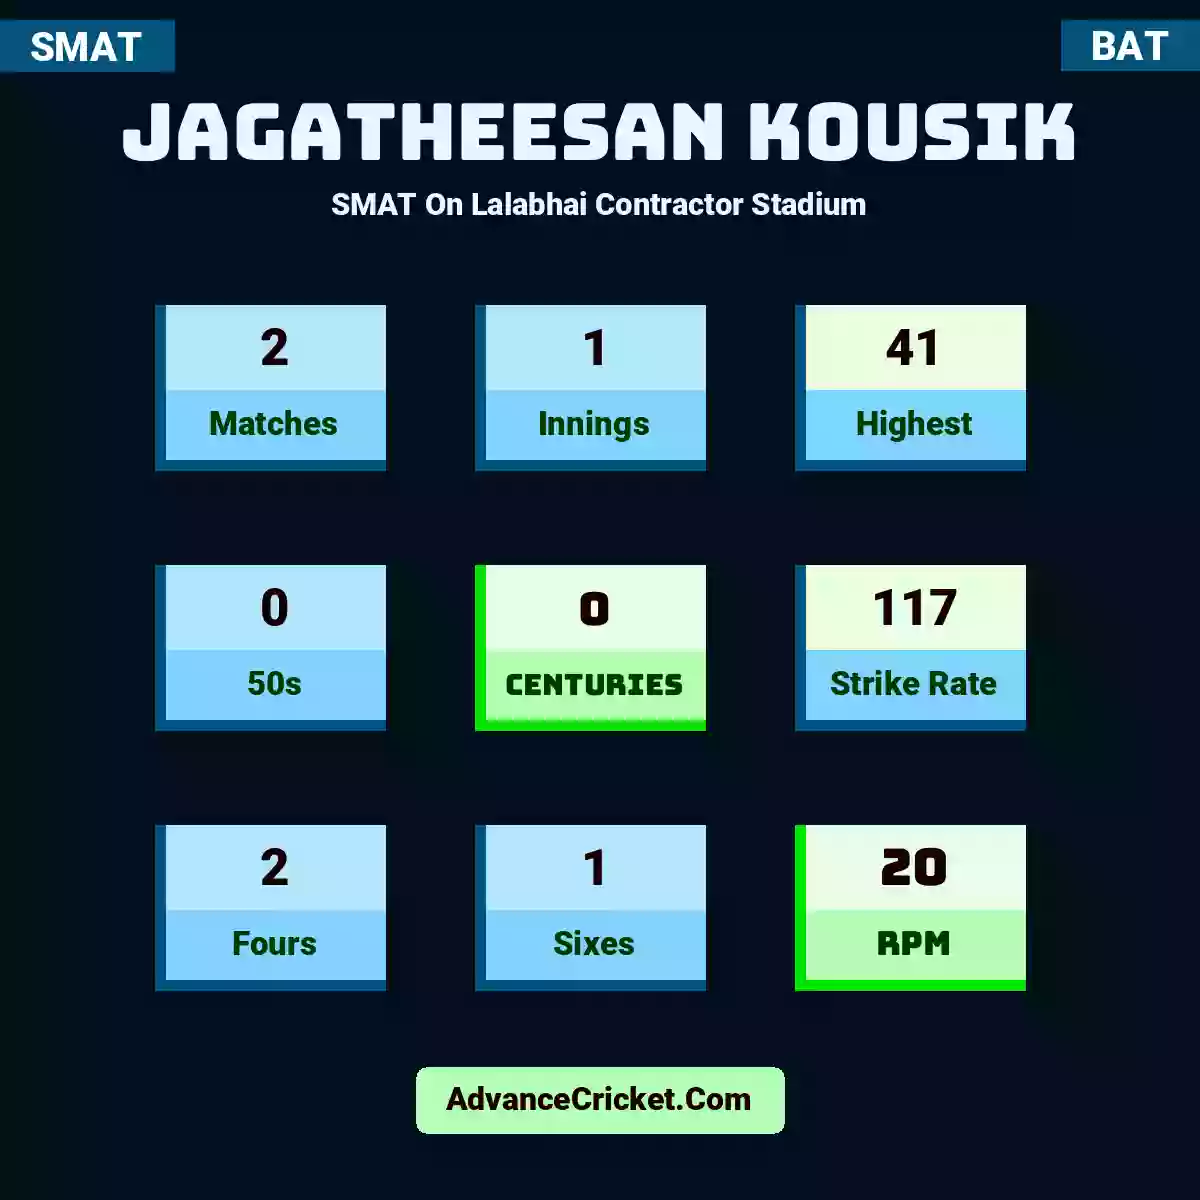 Jagatheesan Kousik SMAT  On Lalabhai Contractor Stadium, Jagatheesan Kousik played 2 matches, scored 41 runs as highest, 0 half-centuries, and 0 centuries, with a strike rate of 117. J.Kousik hit 2 fours and 1 sixes, with an RPM of 20.